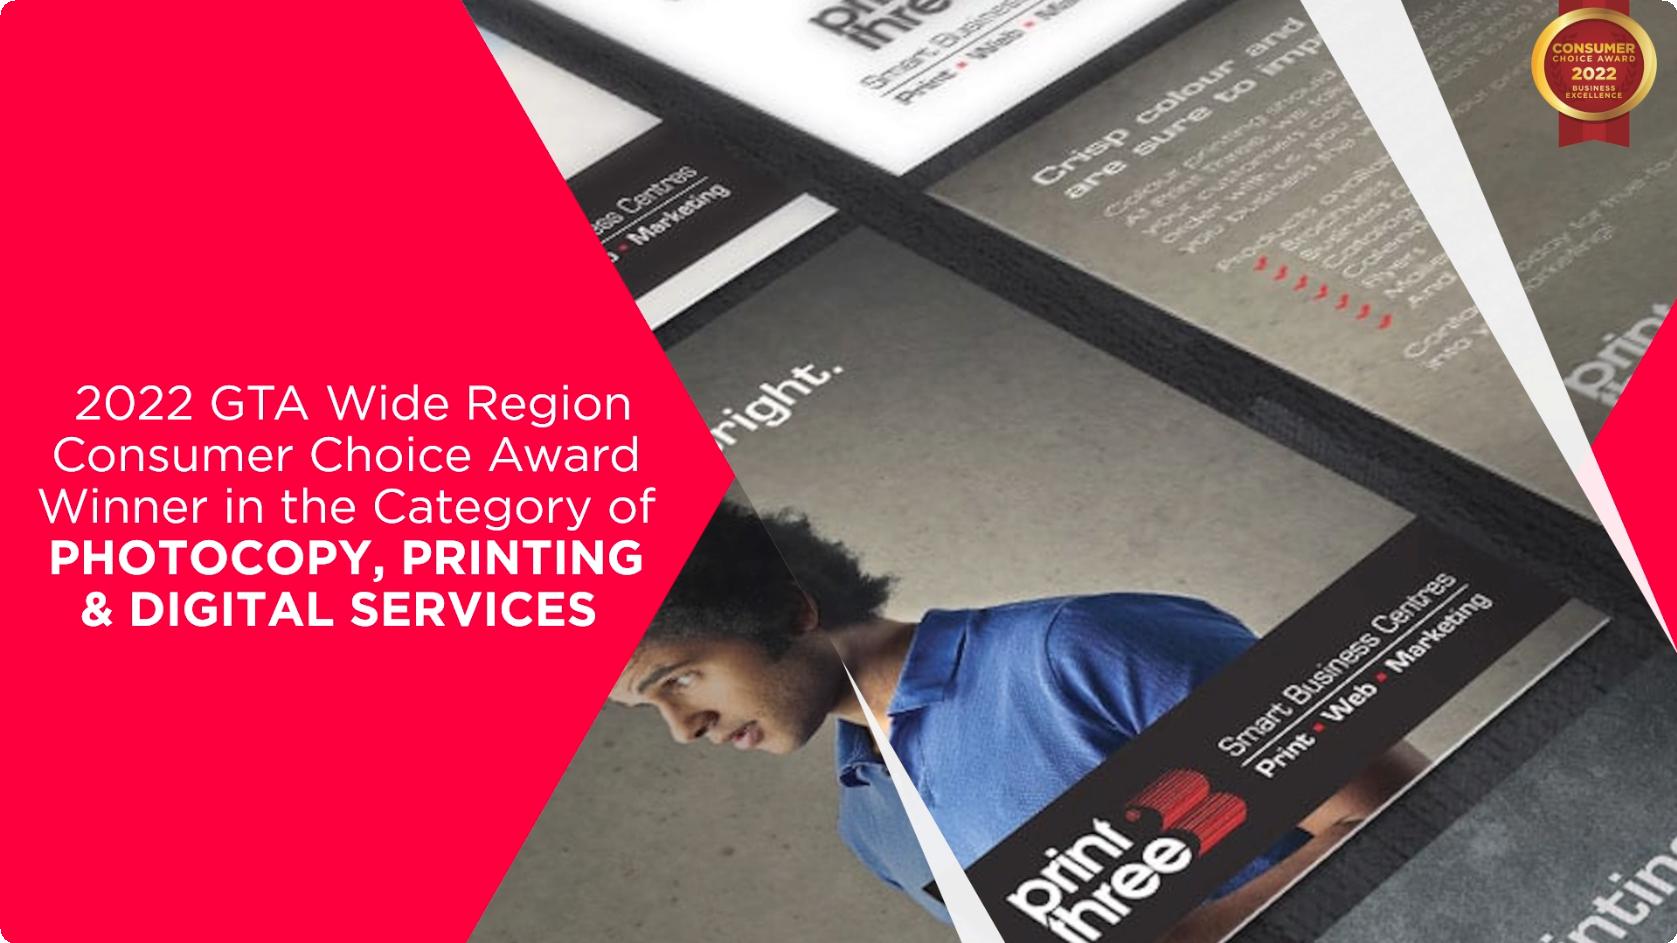 2022 GTA Wide Region Consumer Choice Award Winner in the Category of Photocopy, Printing & Digital Sales.